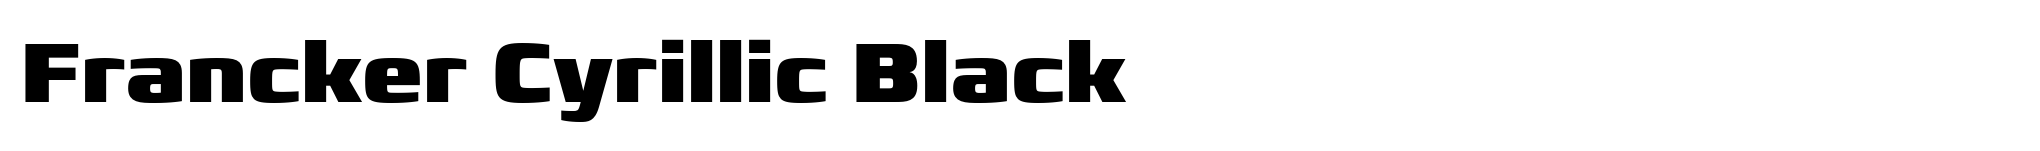 Francker Cyrillic Black image